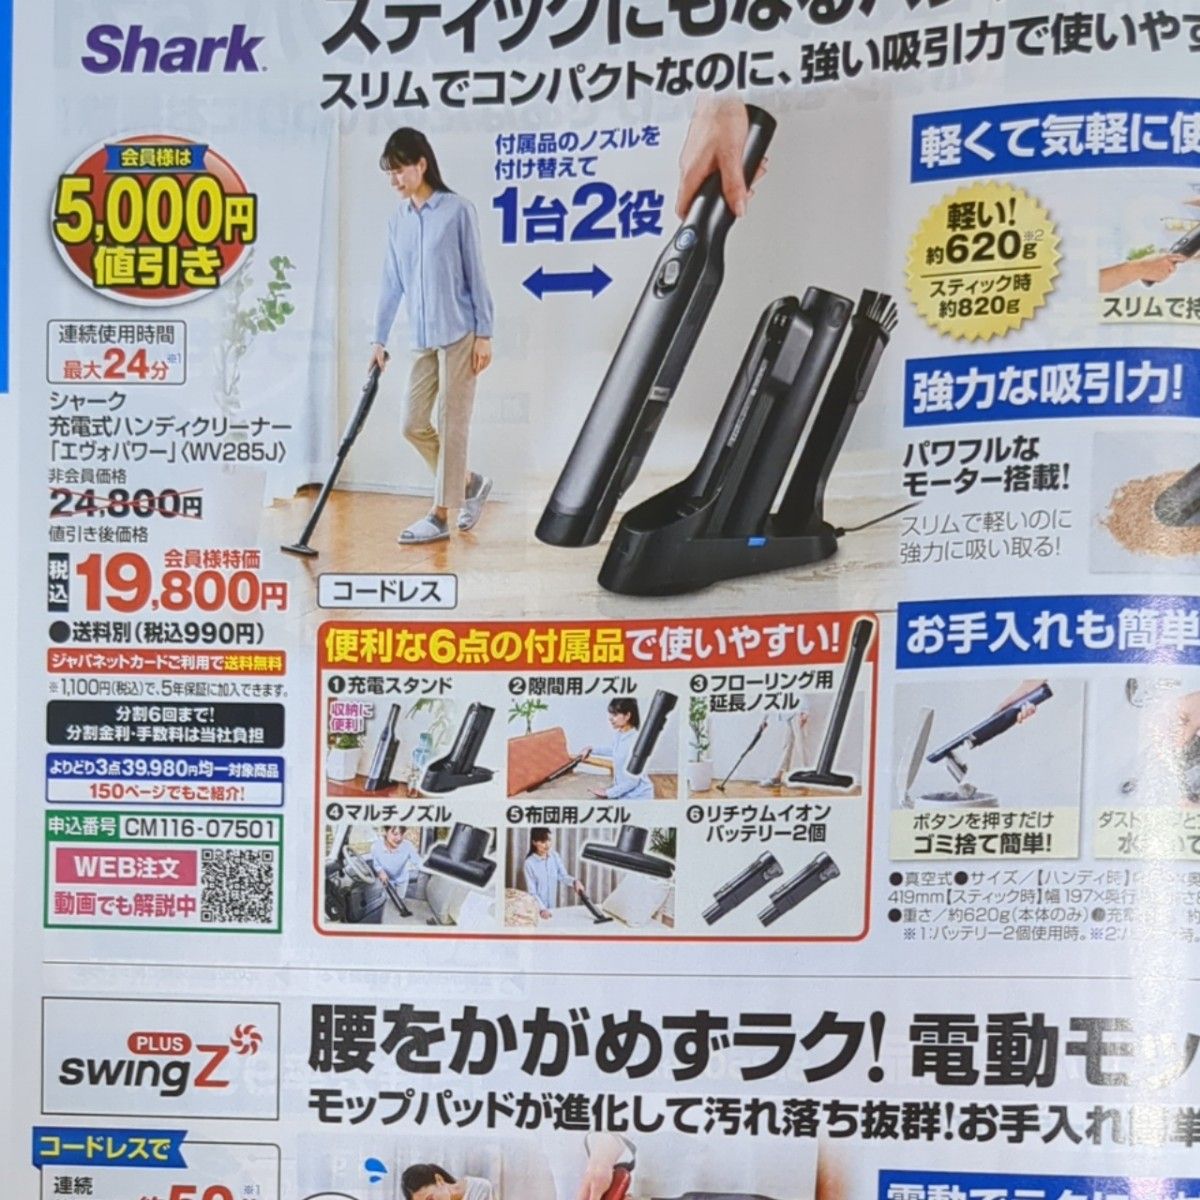 Shark シャーク EVOPOWER Plus W35P 充電式 ハンディクリーナー プラス